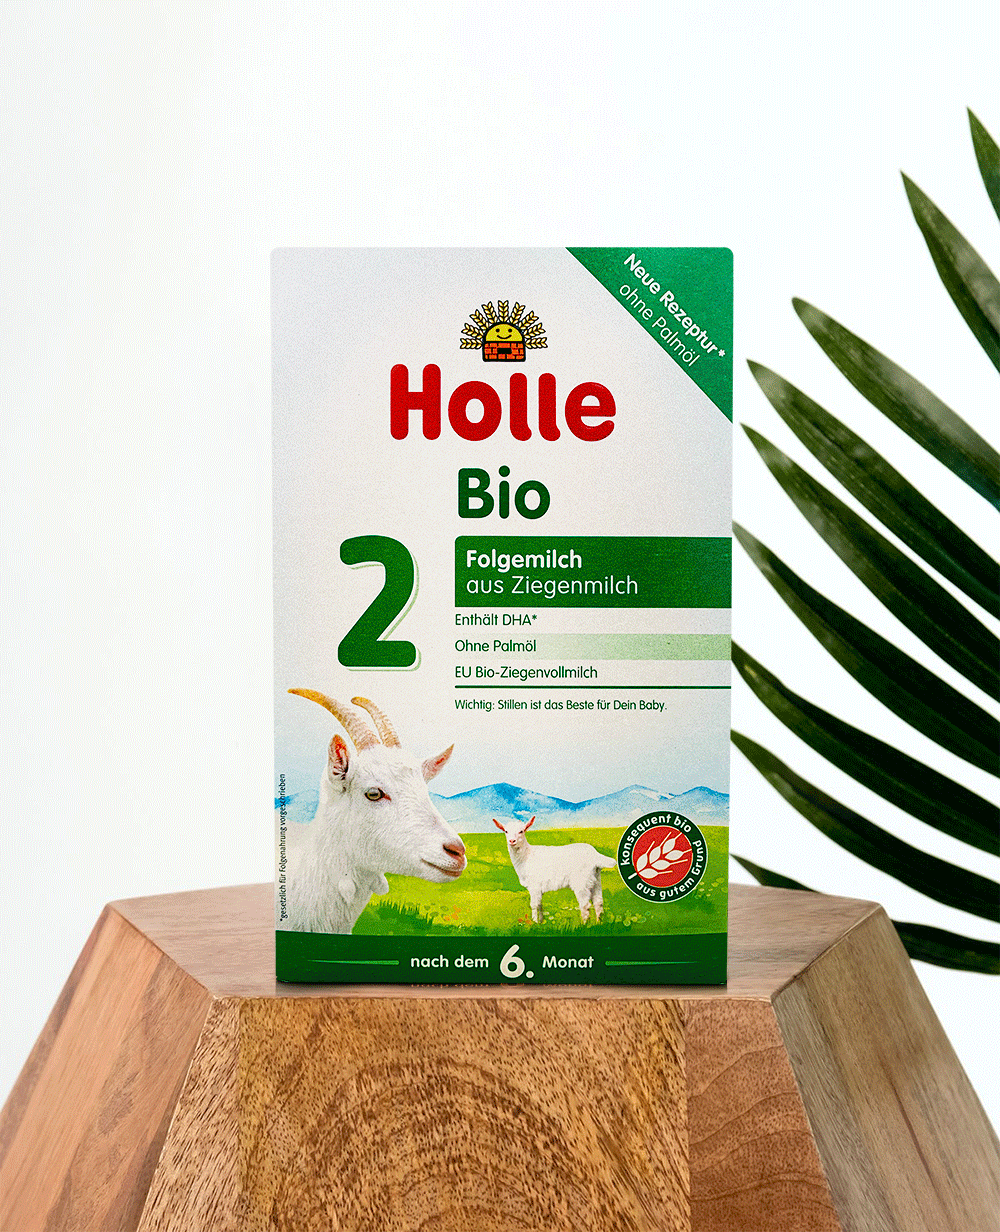 Holle Goat Stage 2 Organic Follow-On Infant Milk Formula